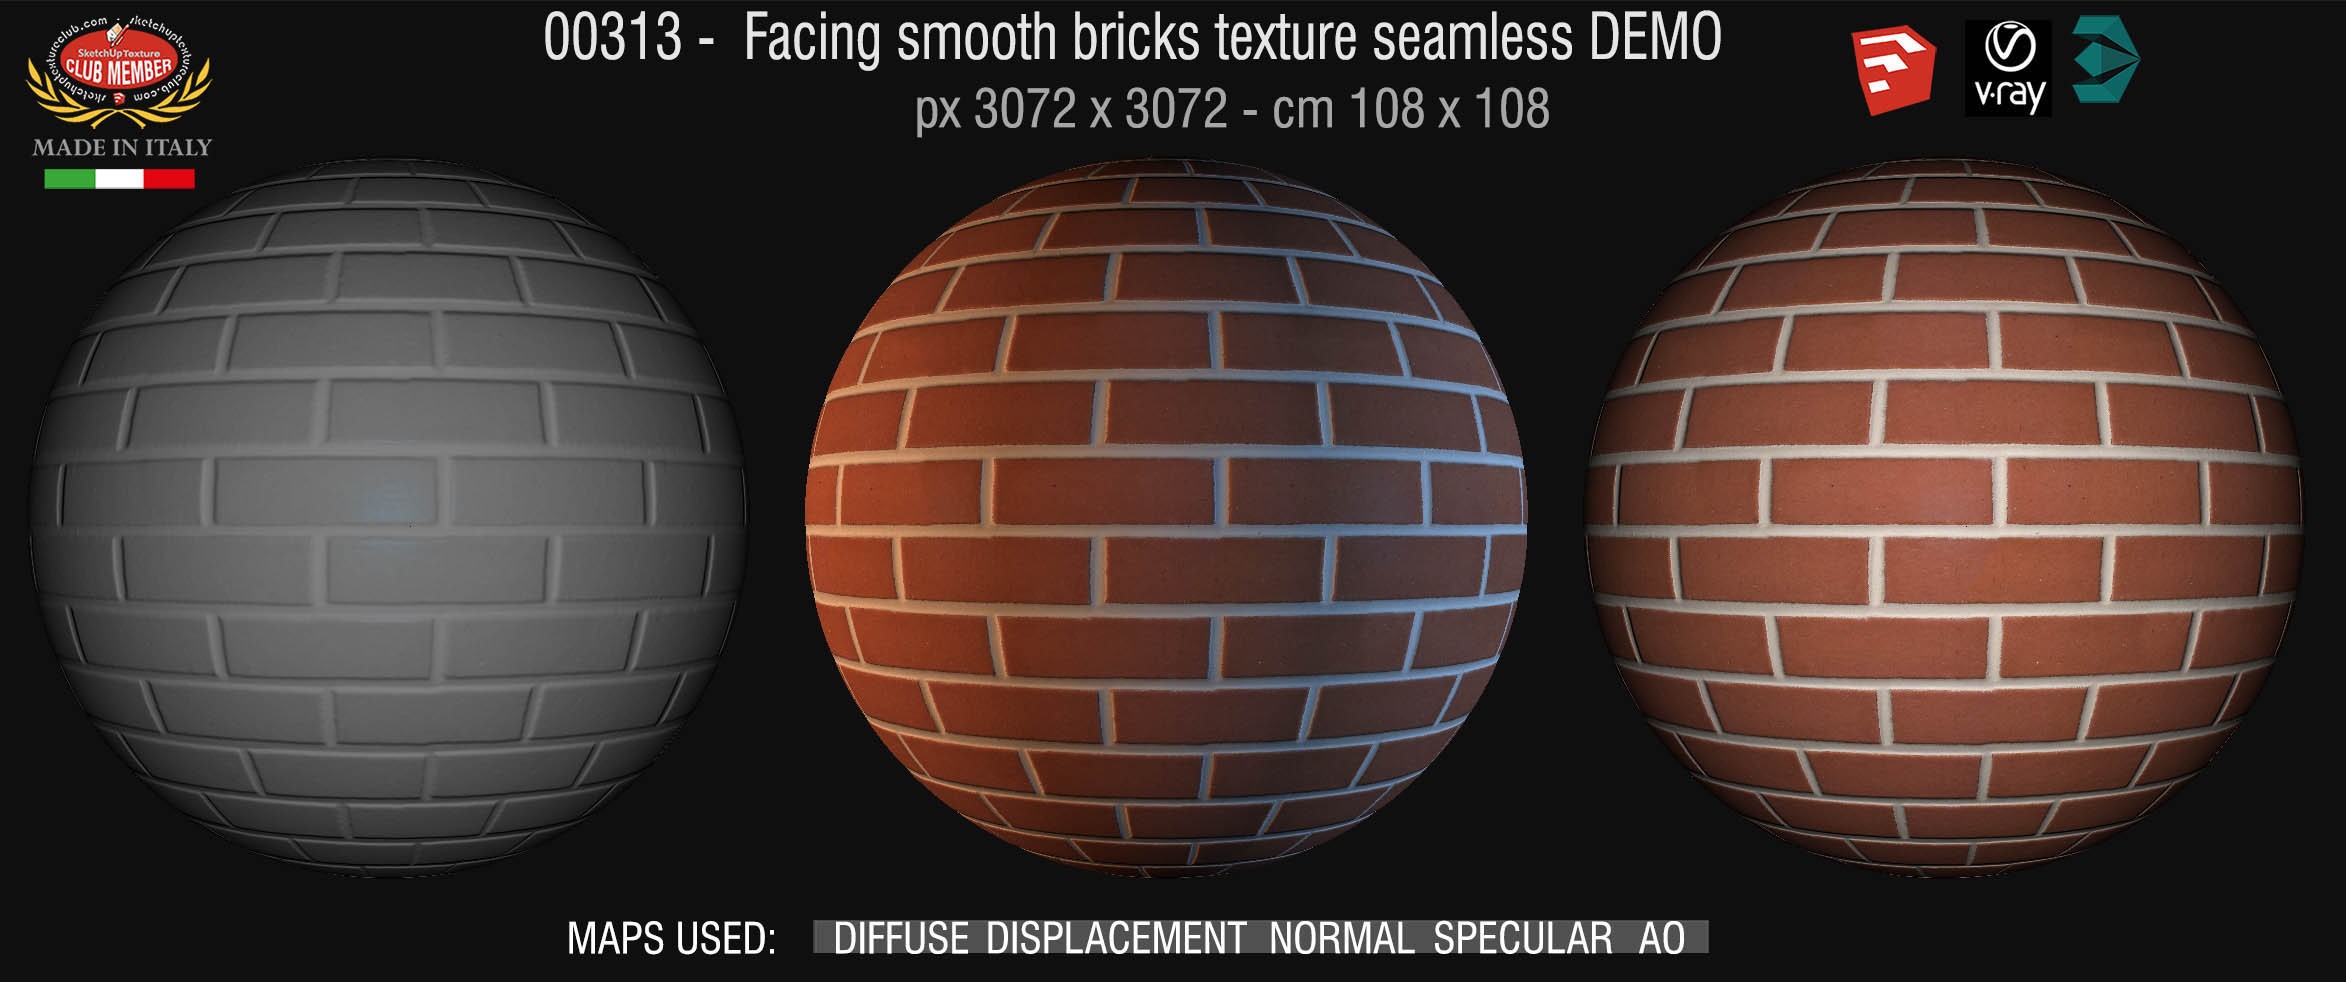 00313 Facing smooth bricks texture seamless + maps DEMO